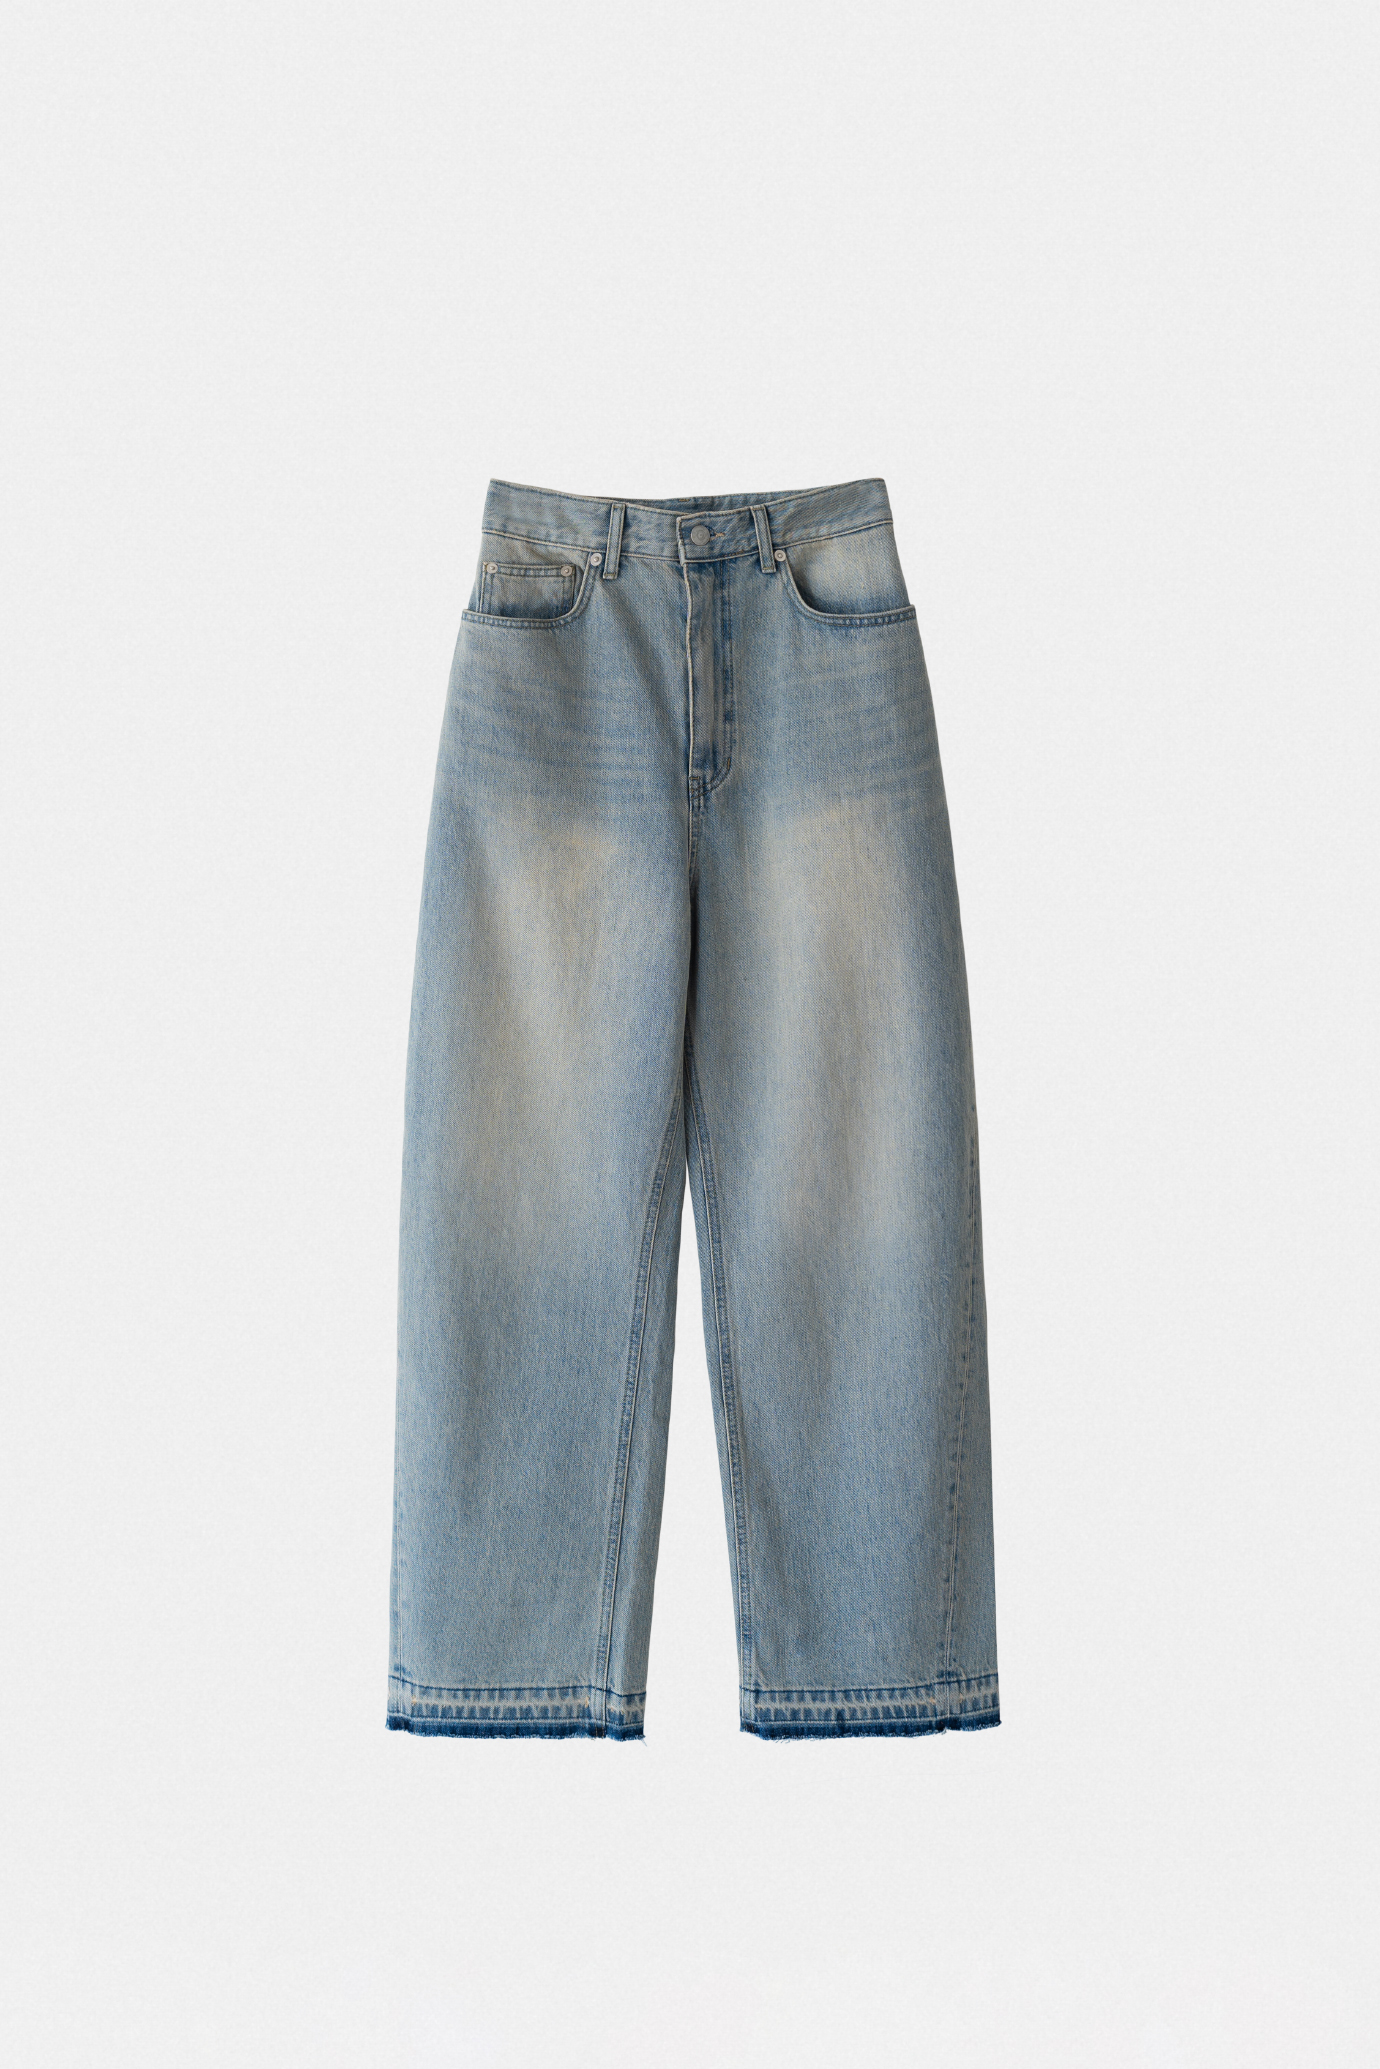 19533_Vintage Loose-fit Jeans [주문일로부터 20일이내 배송]